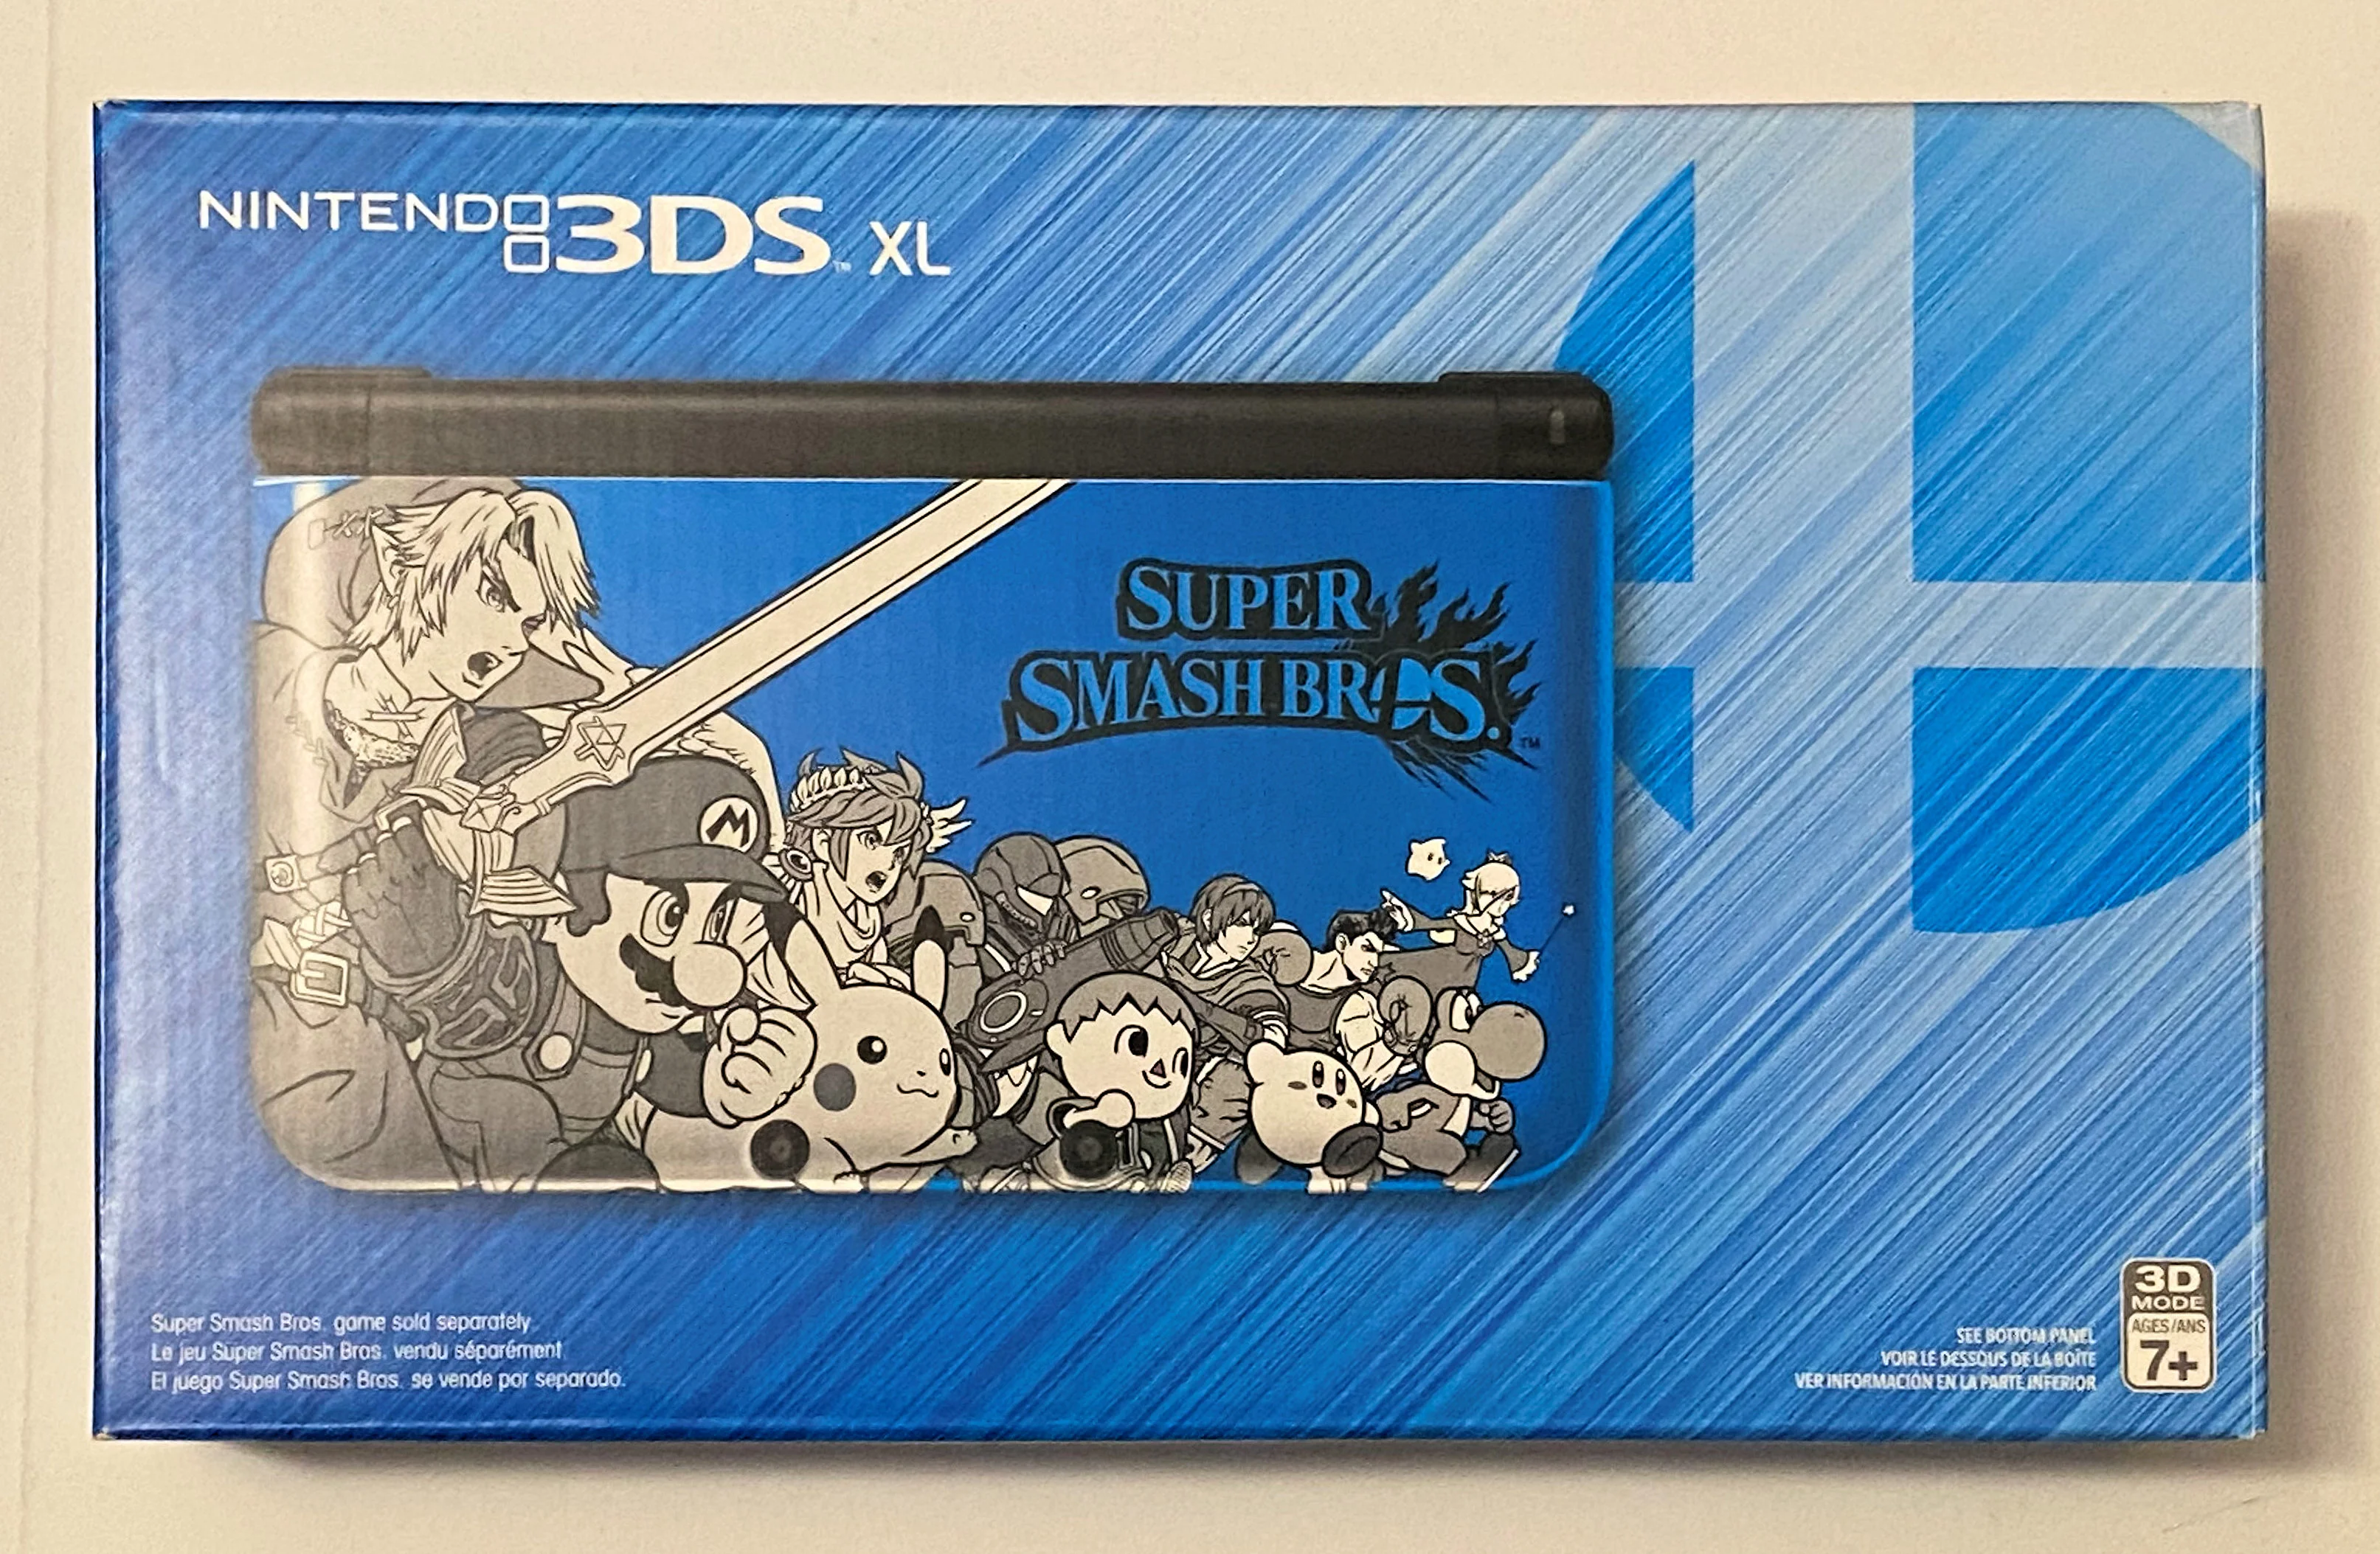  Nintendo 3DS XL Super Smash Bros Blue Console [US]